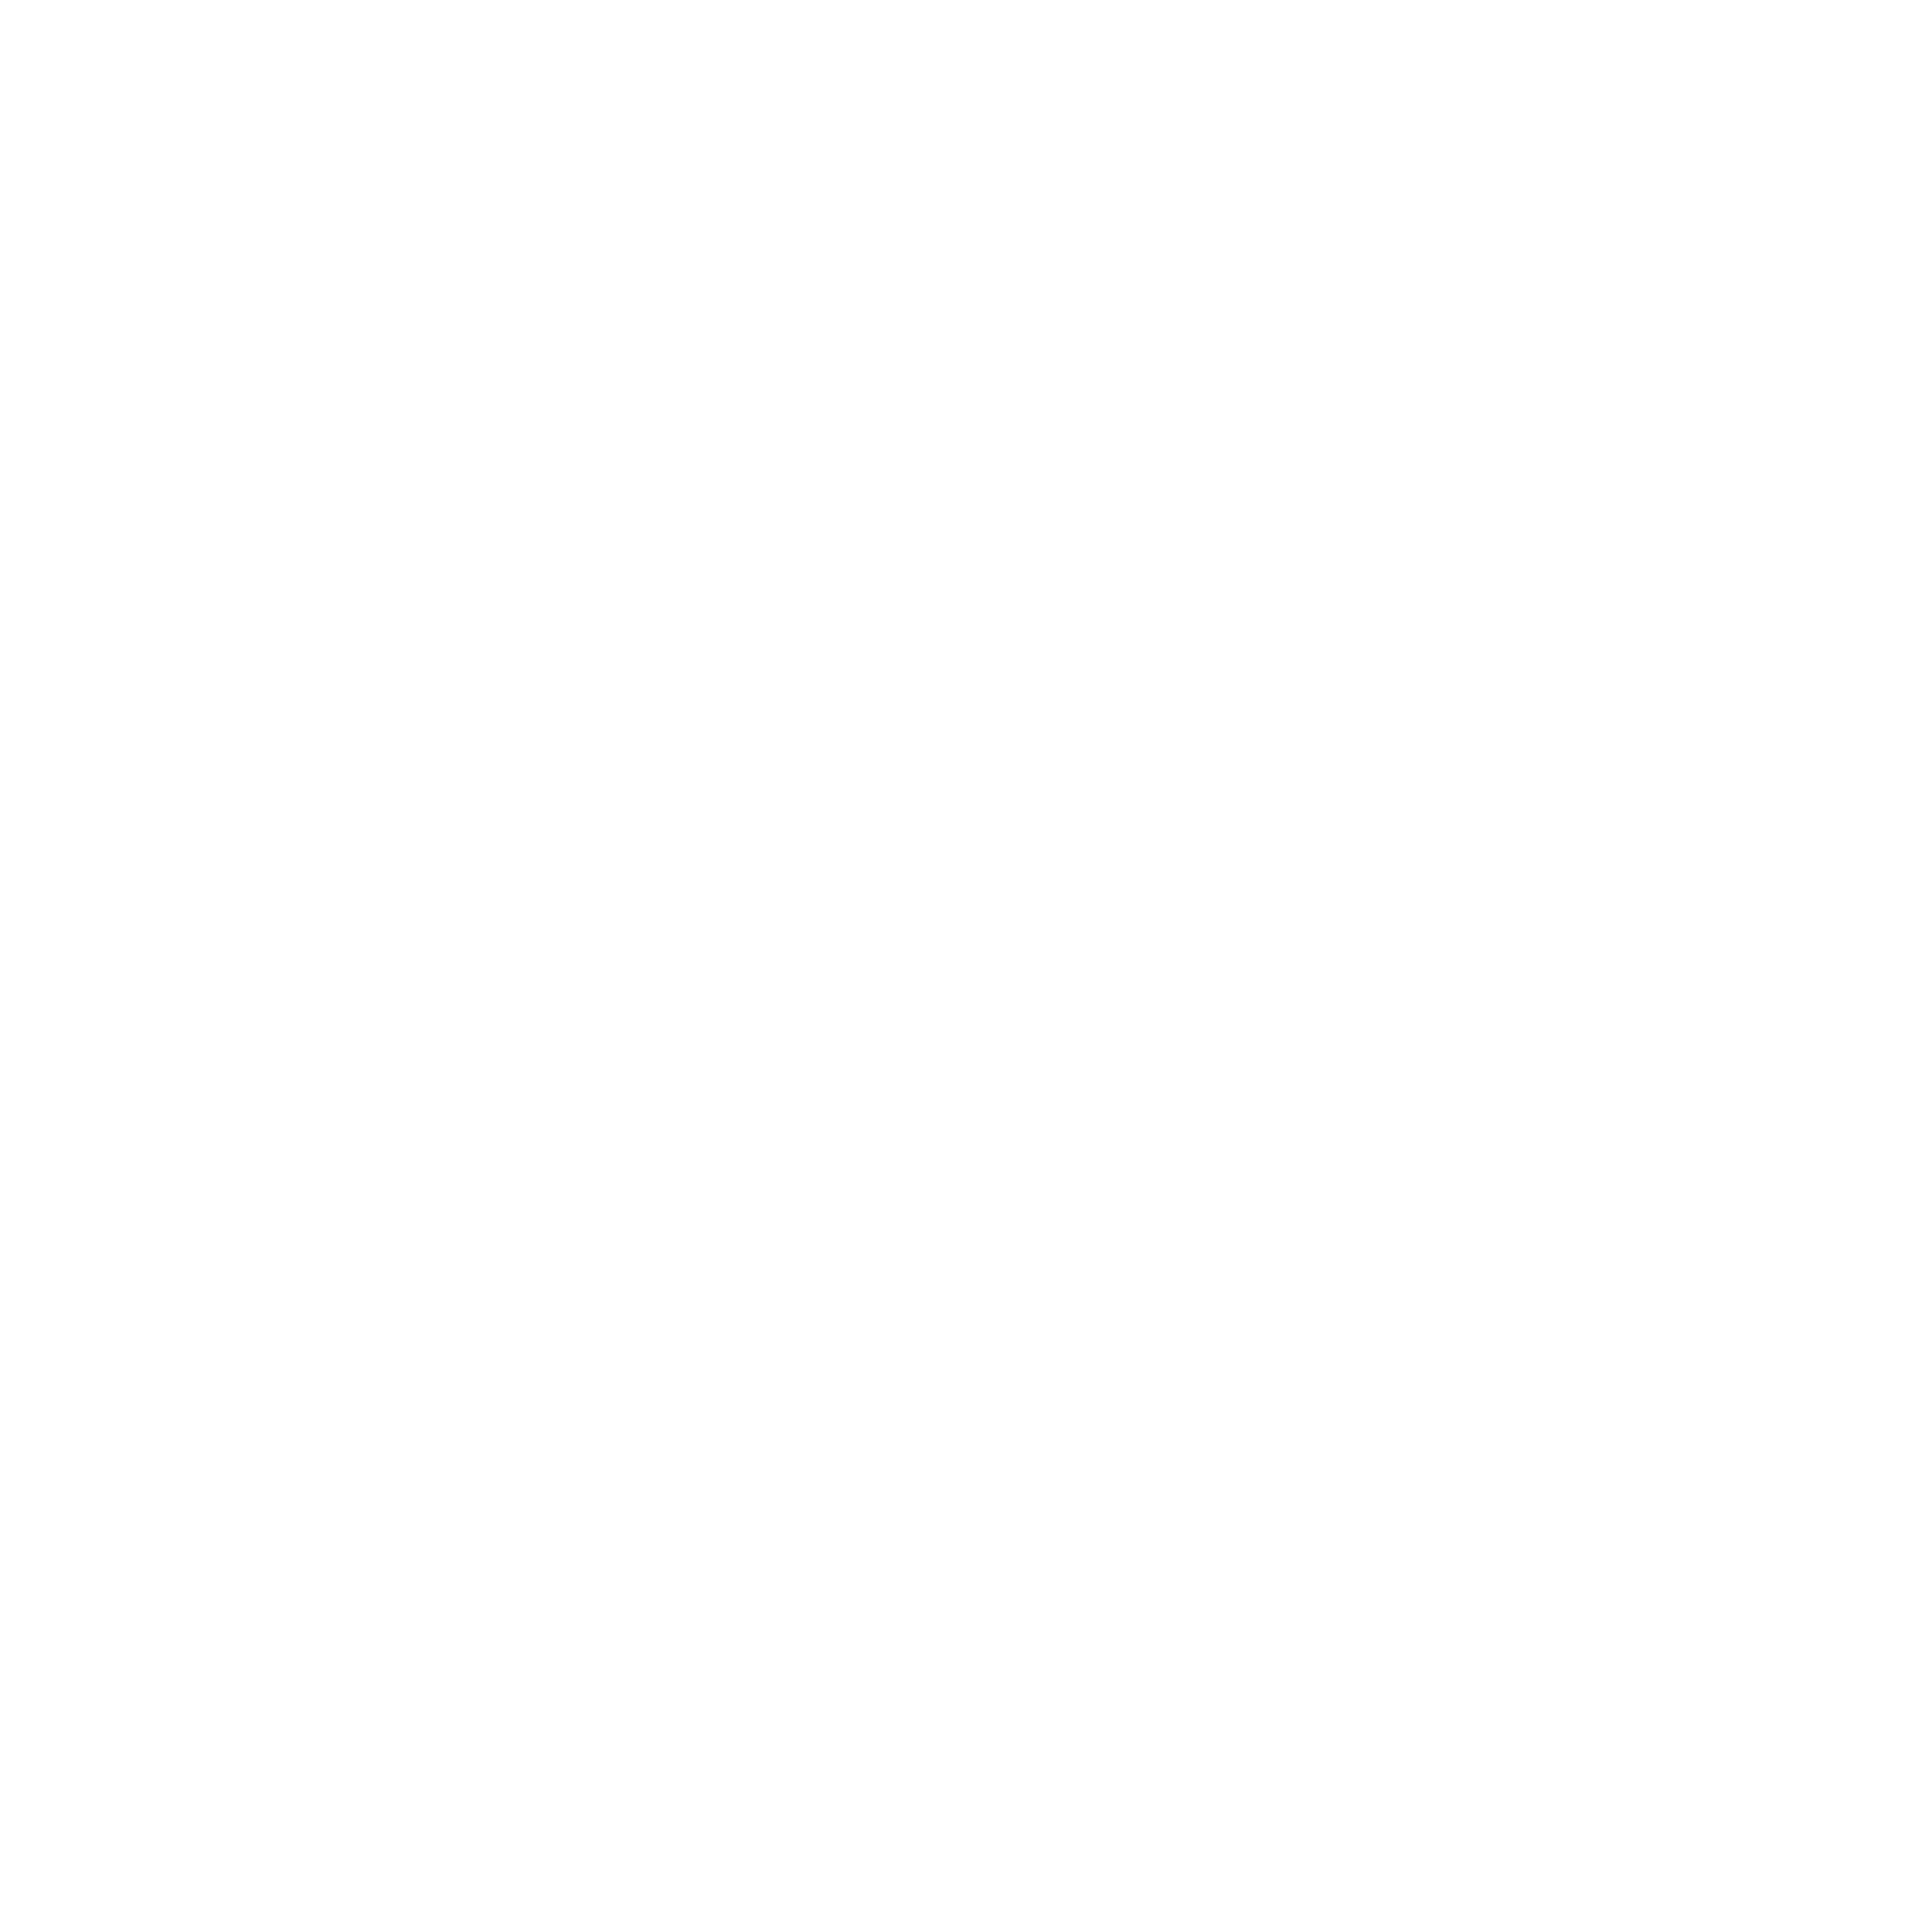 Make a Wish Logo - Make A Wish Logo PNG Transparent & SVG Vector - Freebie Supply